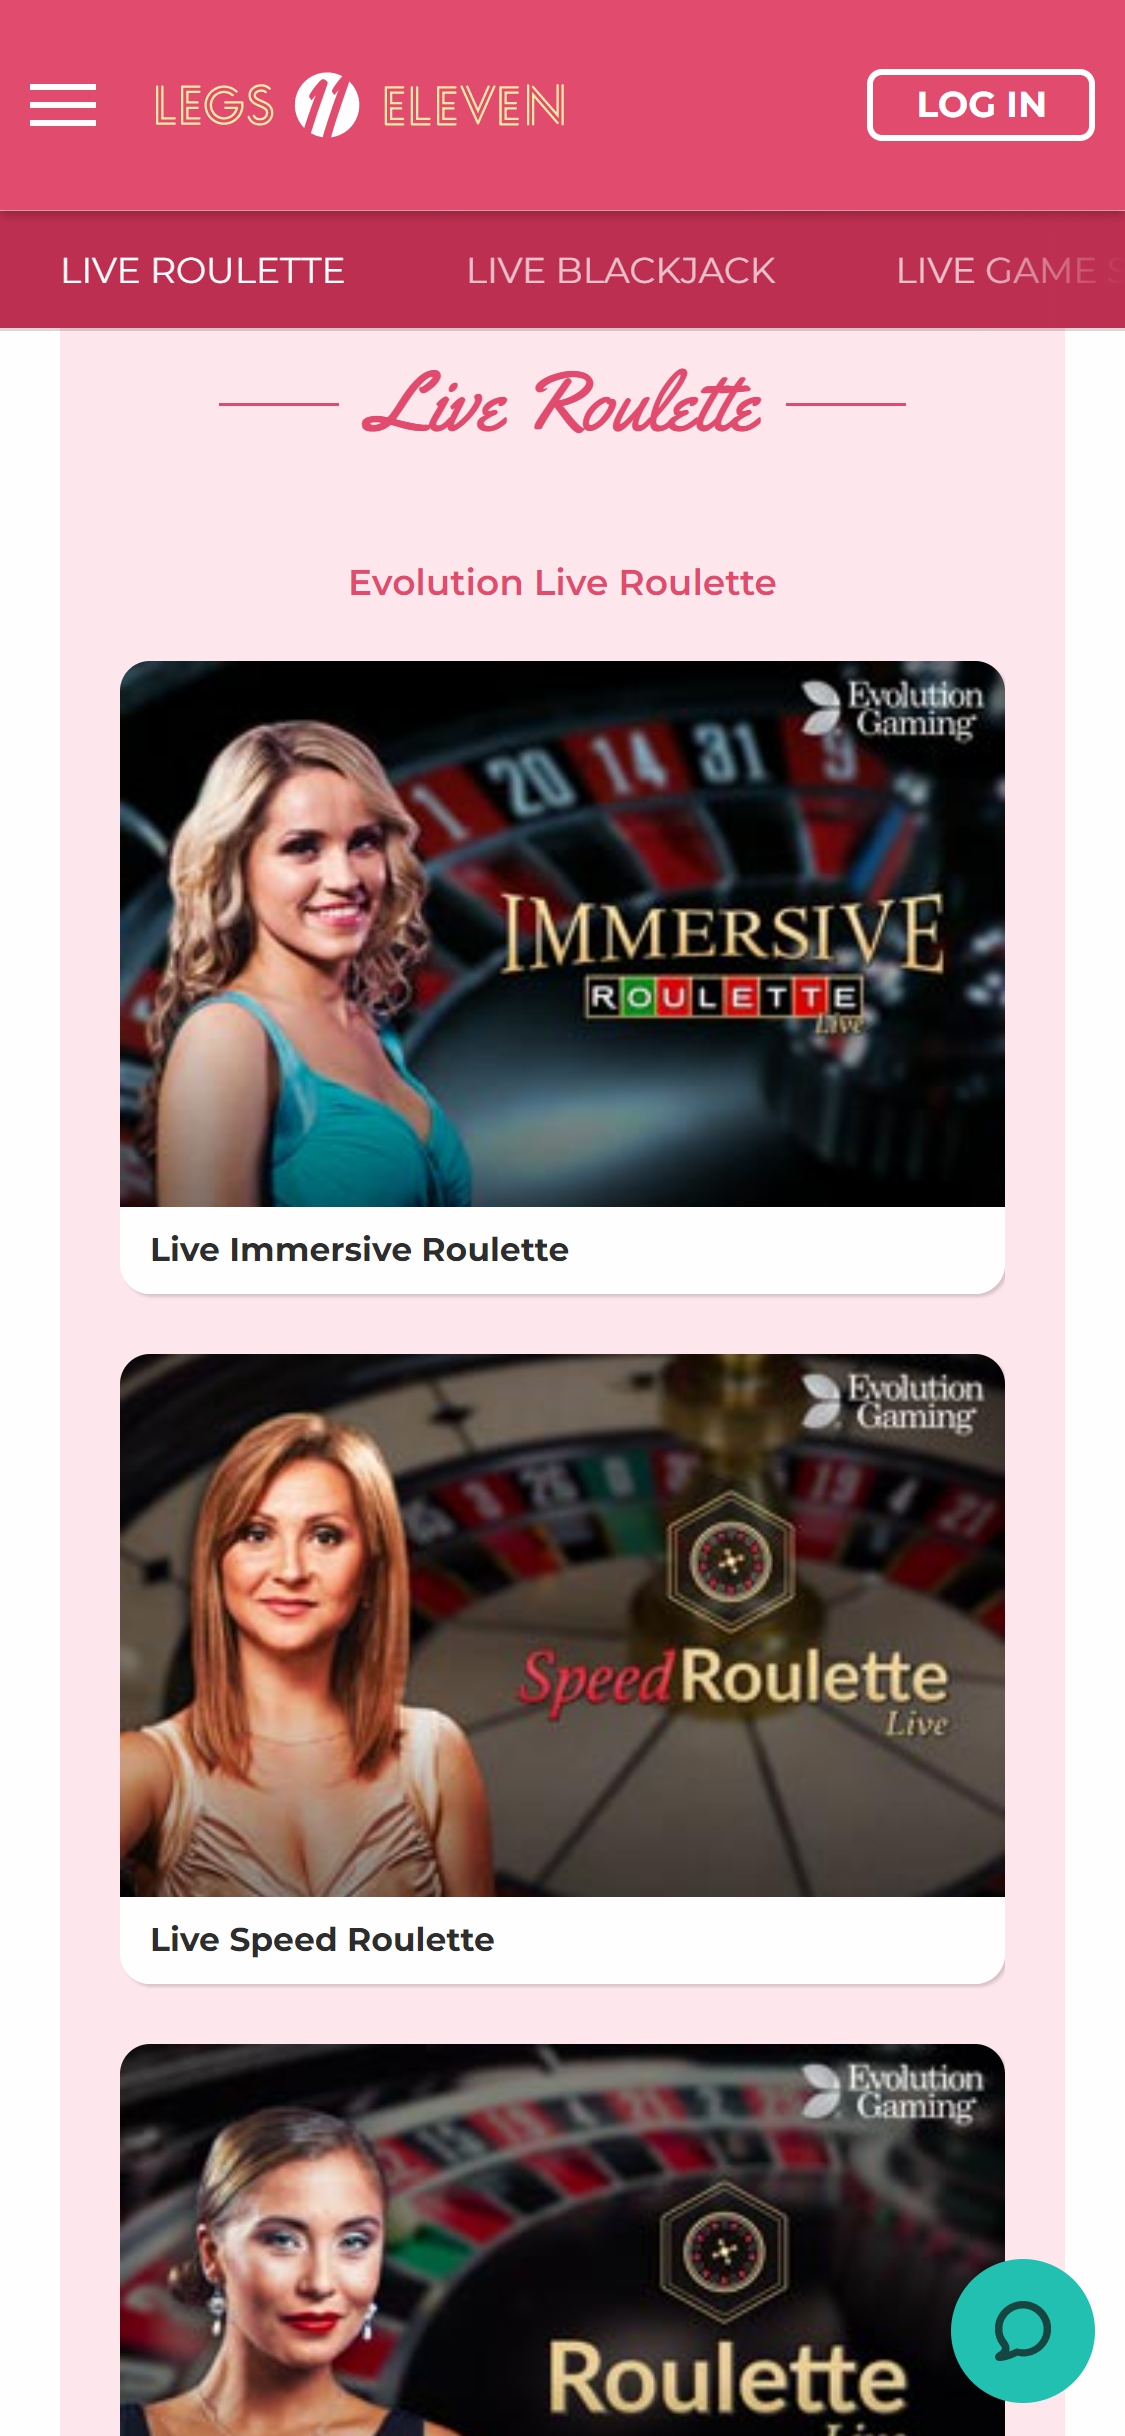 Legs Eleven Casino Mobile Live Dealer Games Review